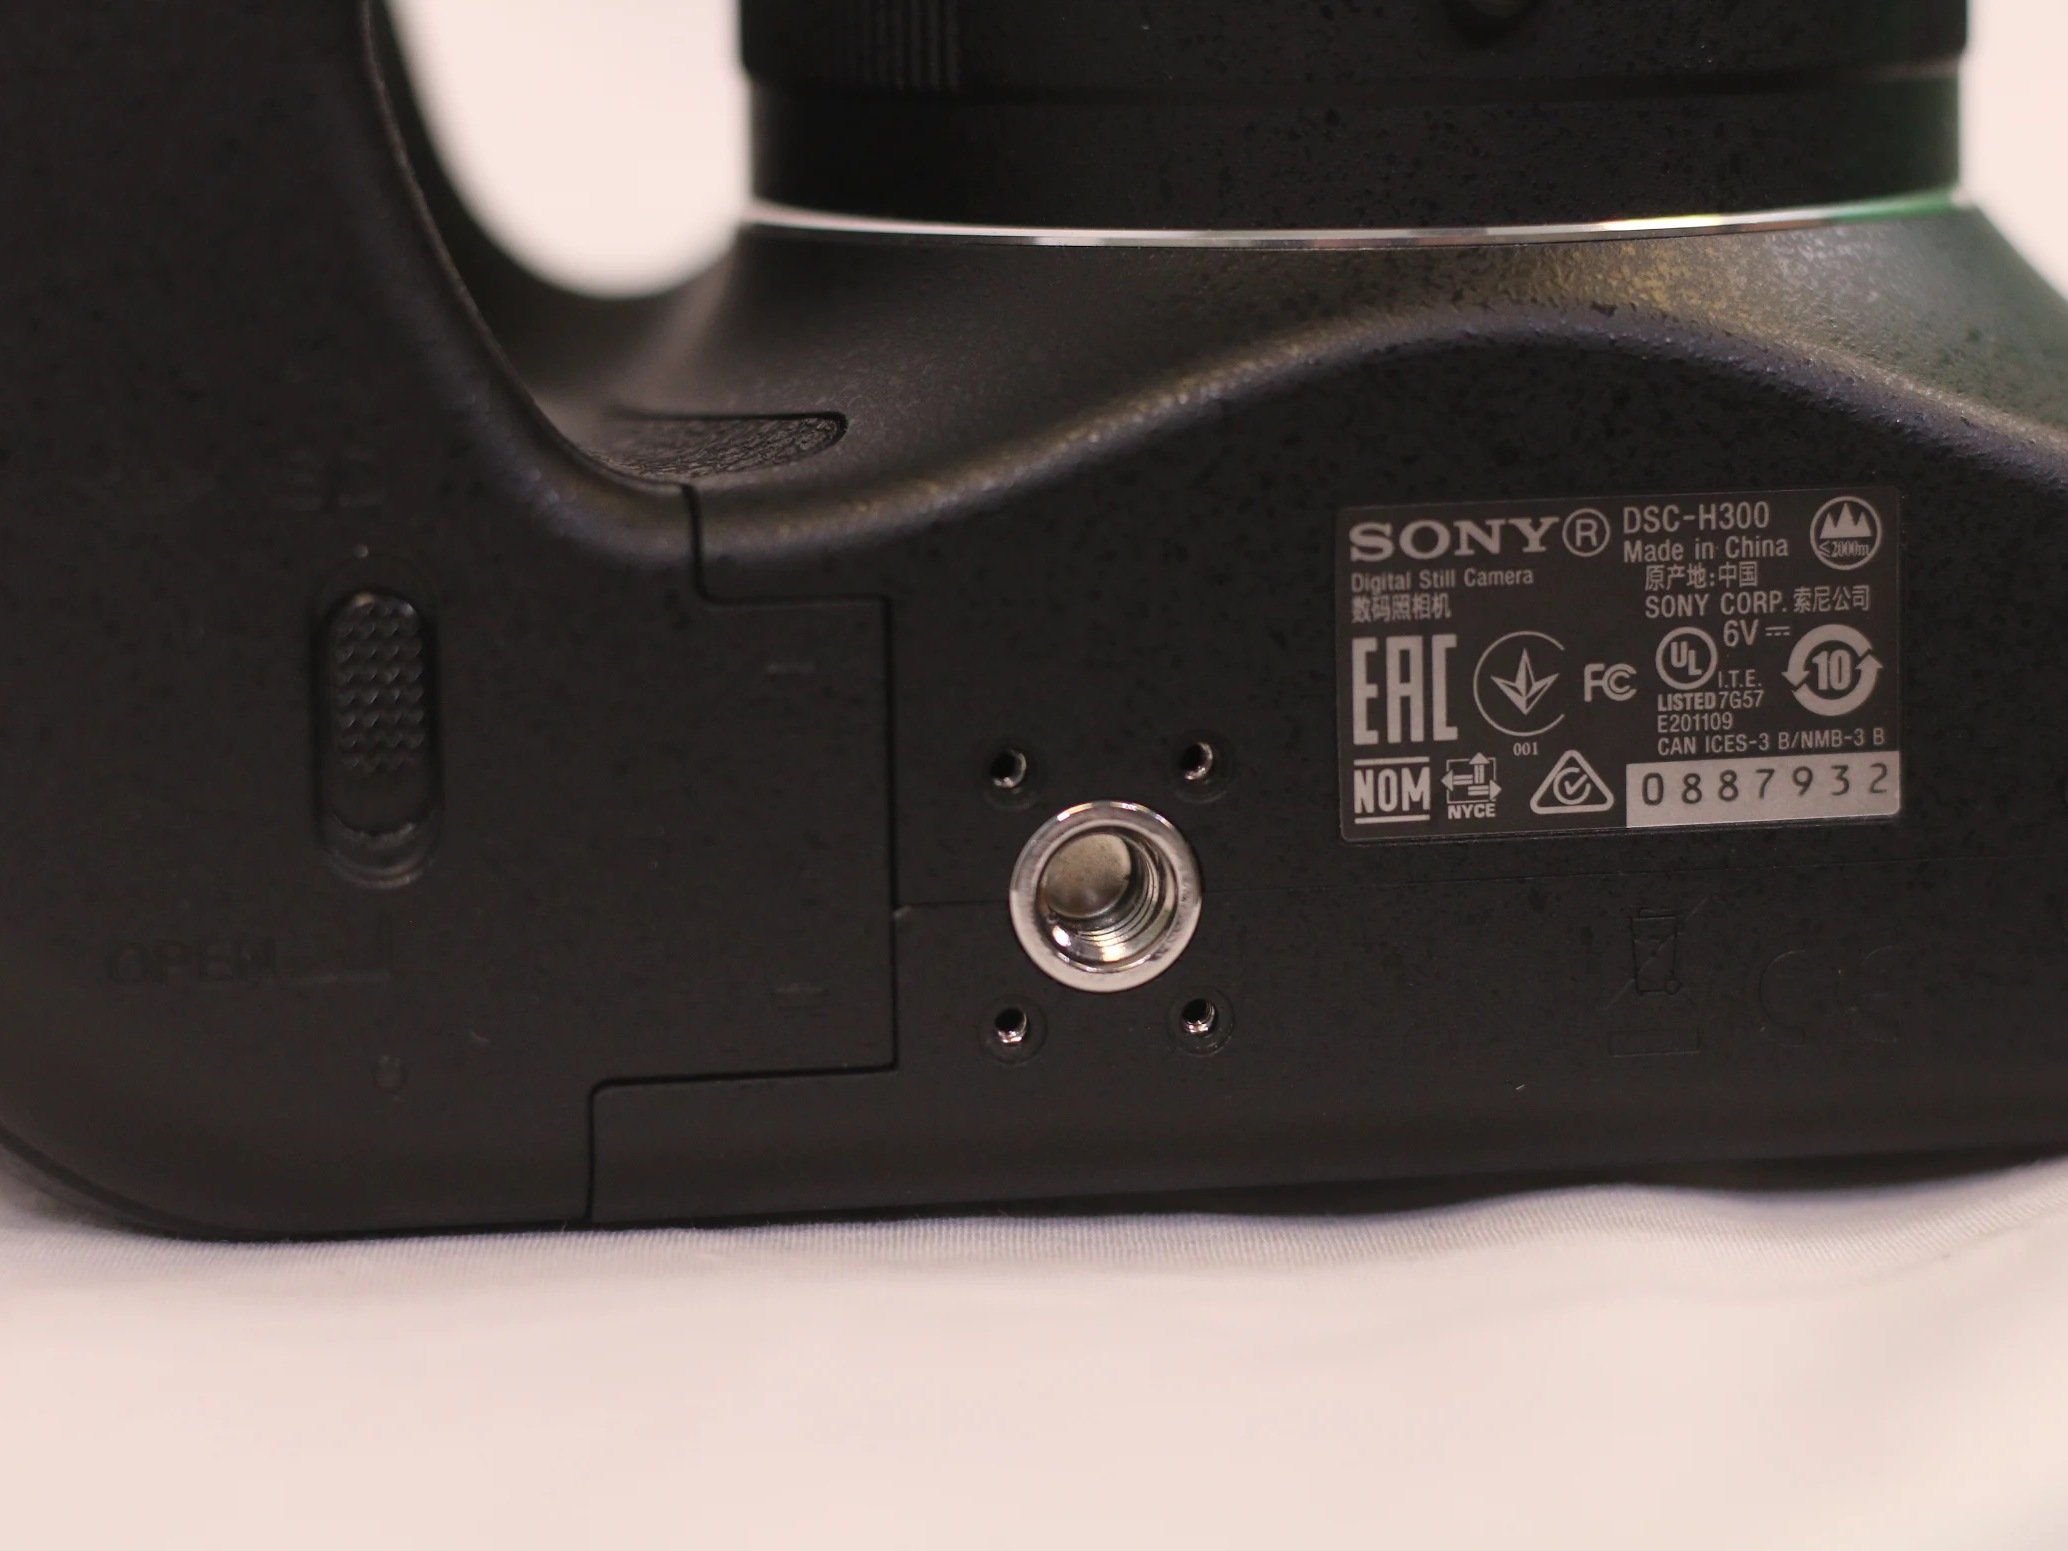 Sony camera dsc h300